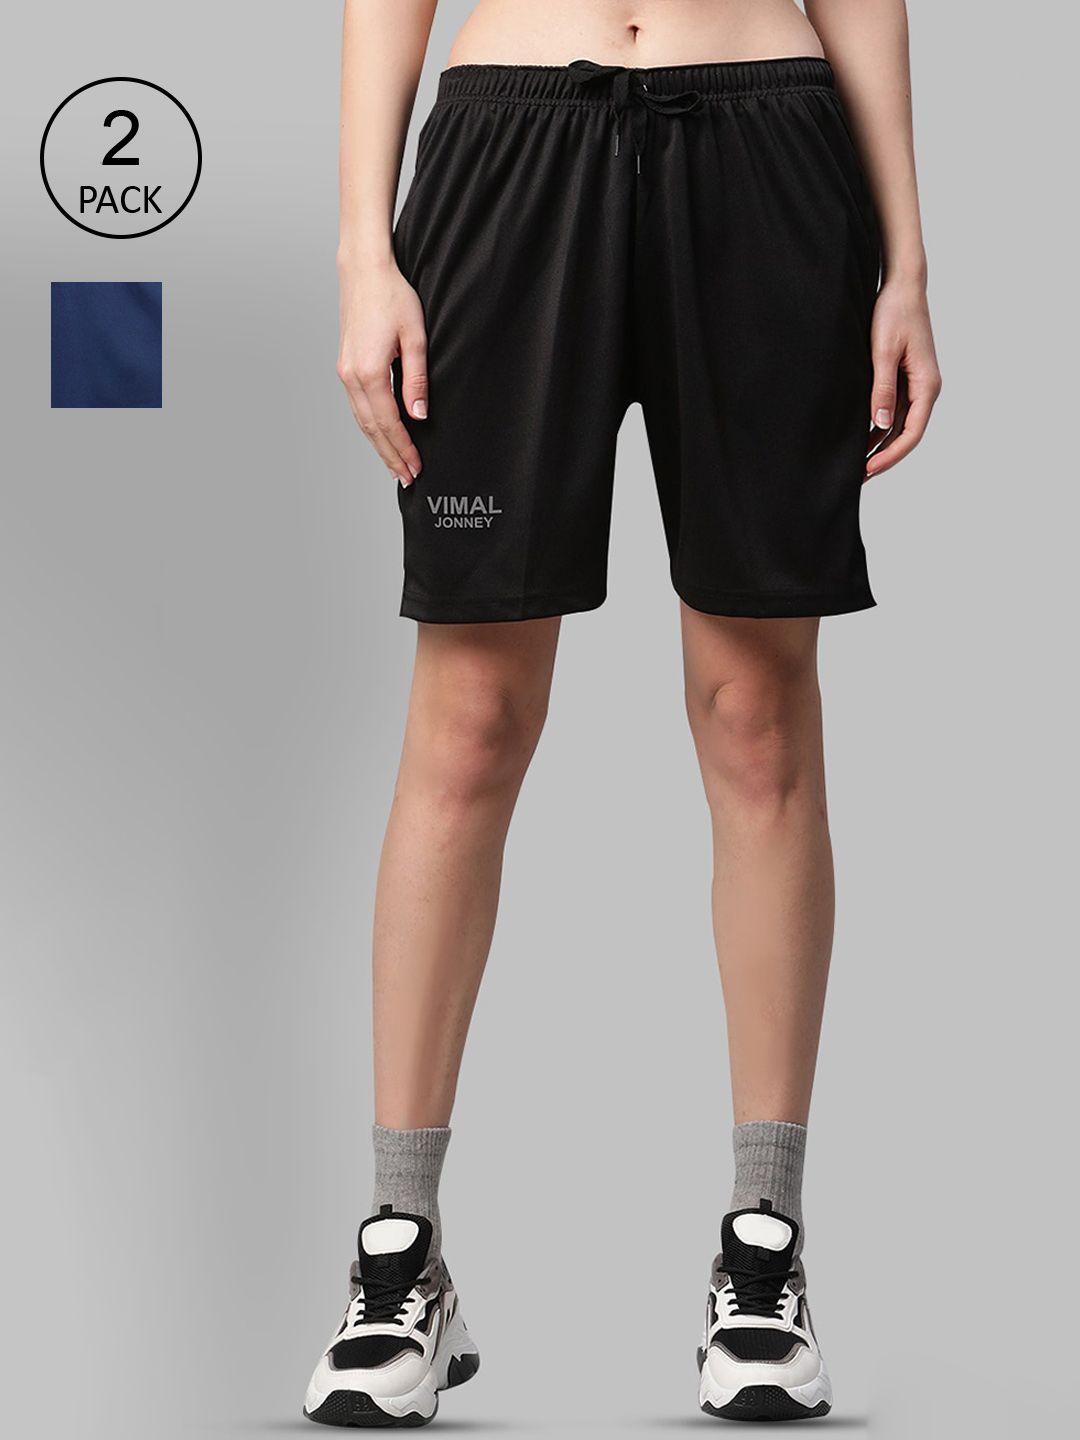 vimal jonney women pack of 2 sports shorts